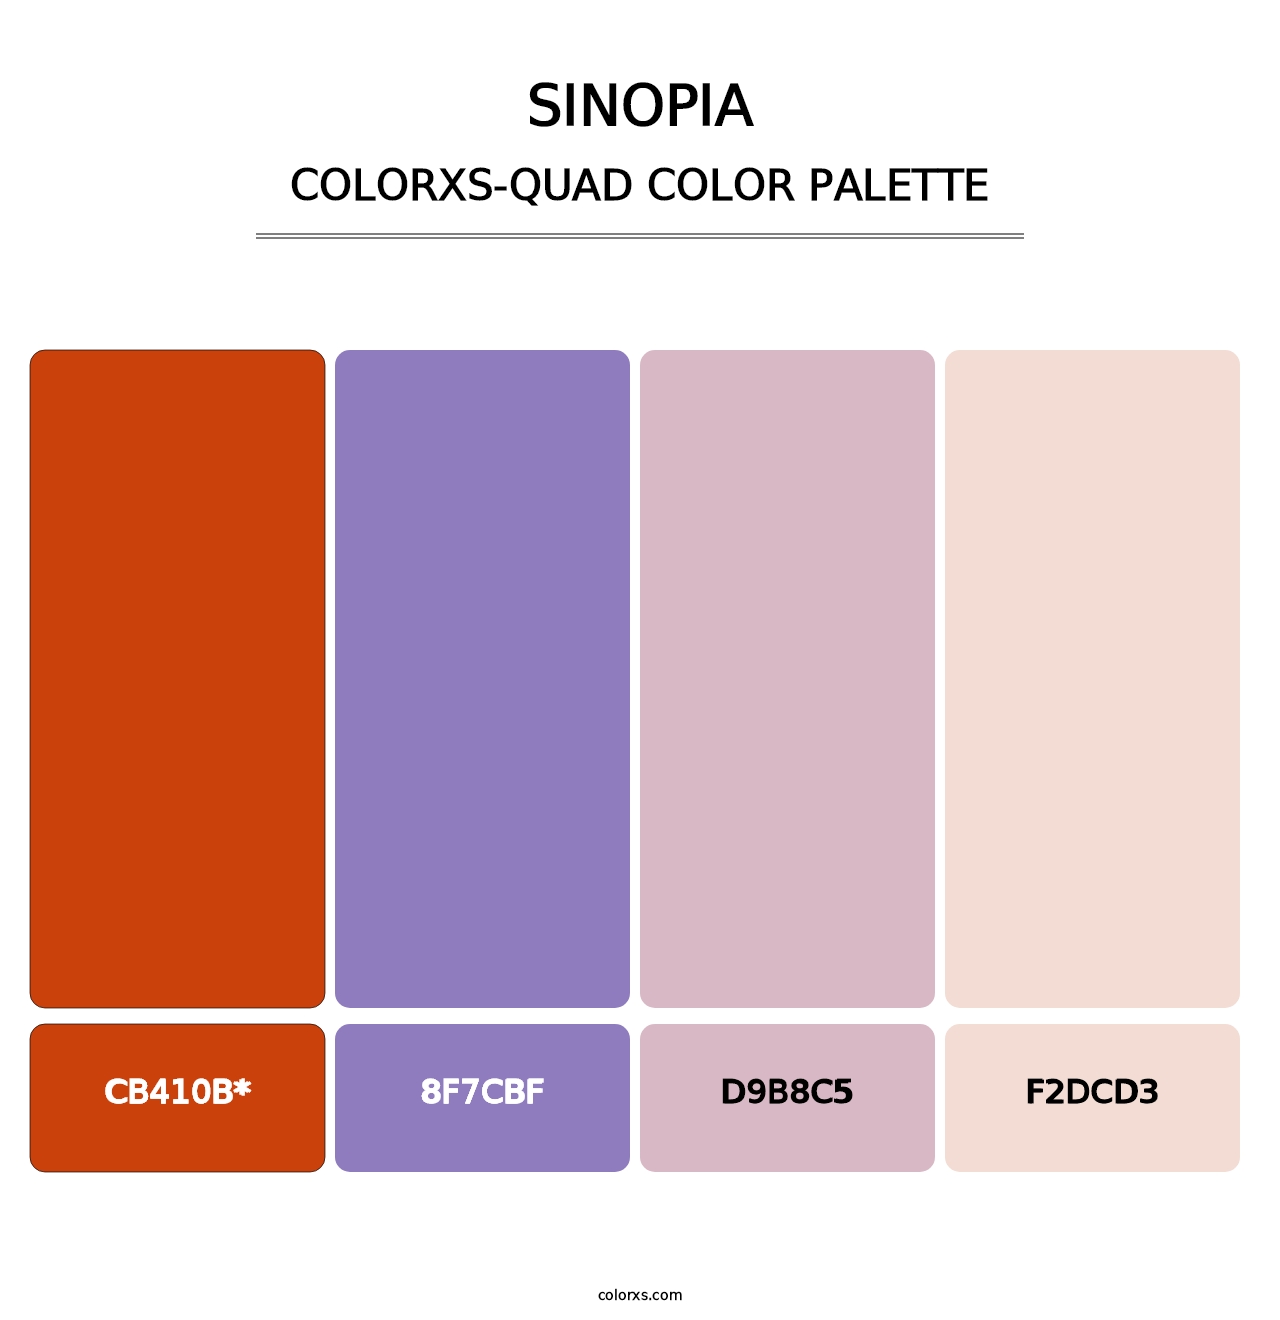 Sinopia - Colorxs Quad Palette